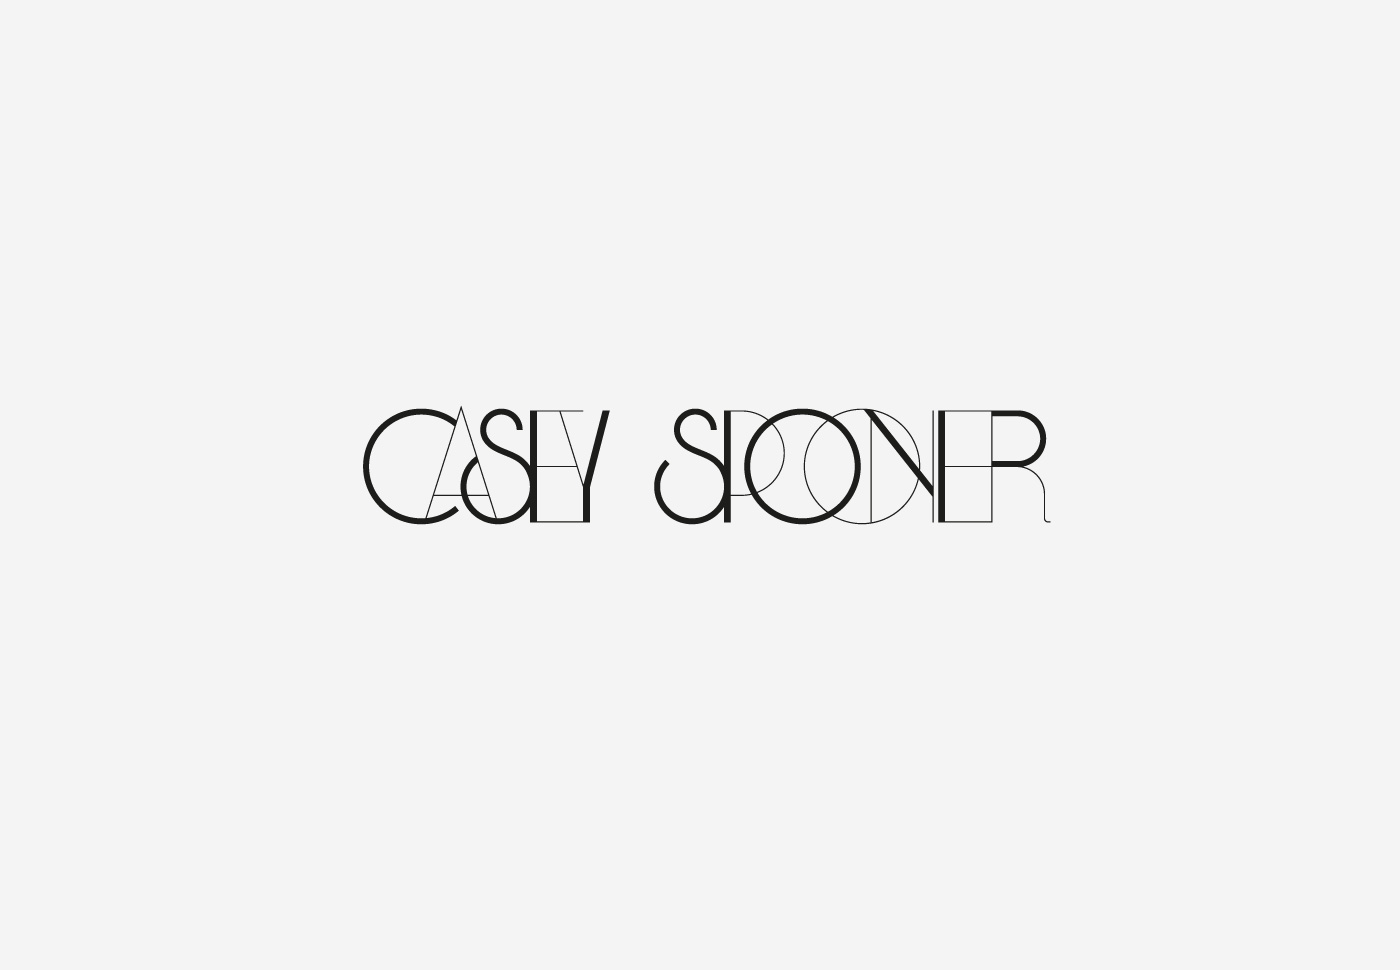 Casey Spooner – Logo